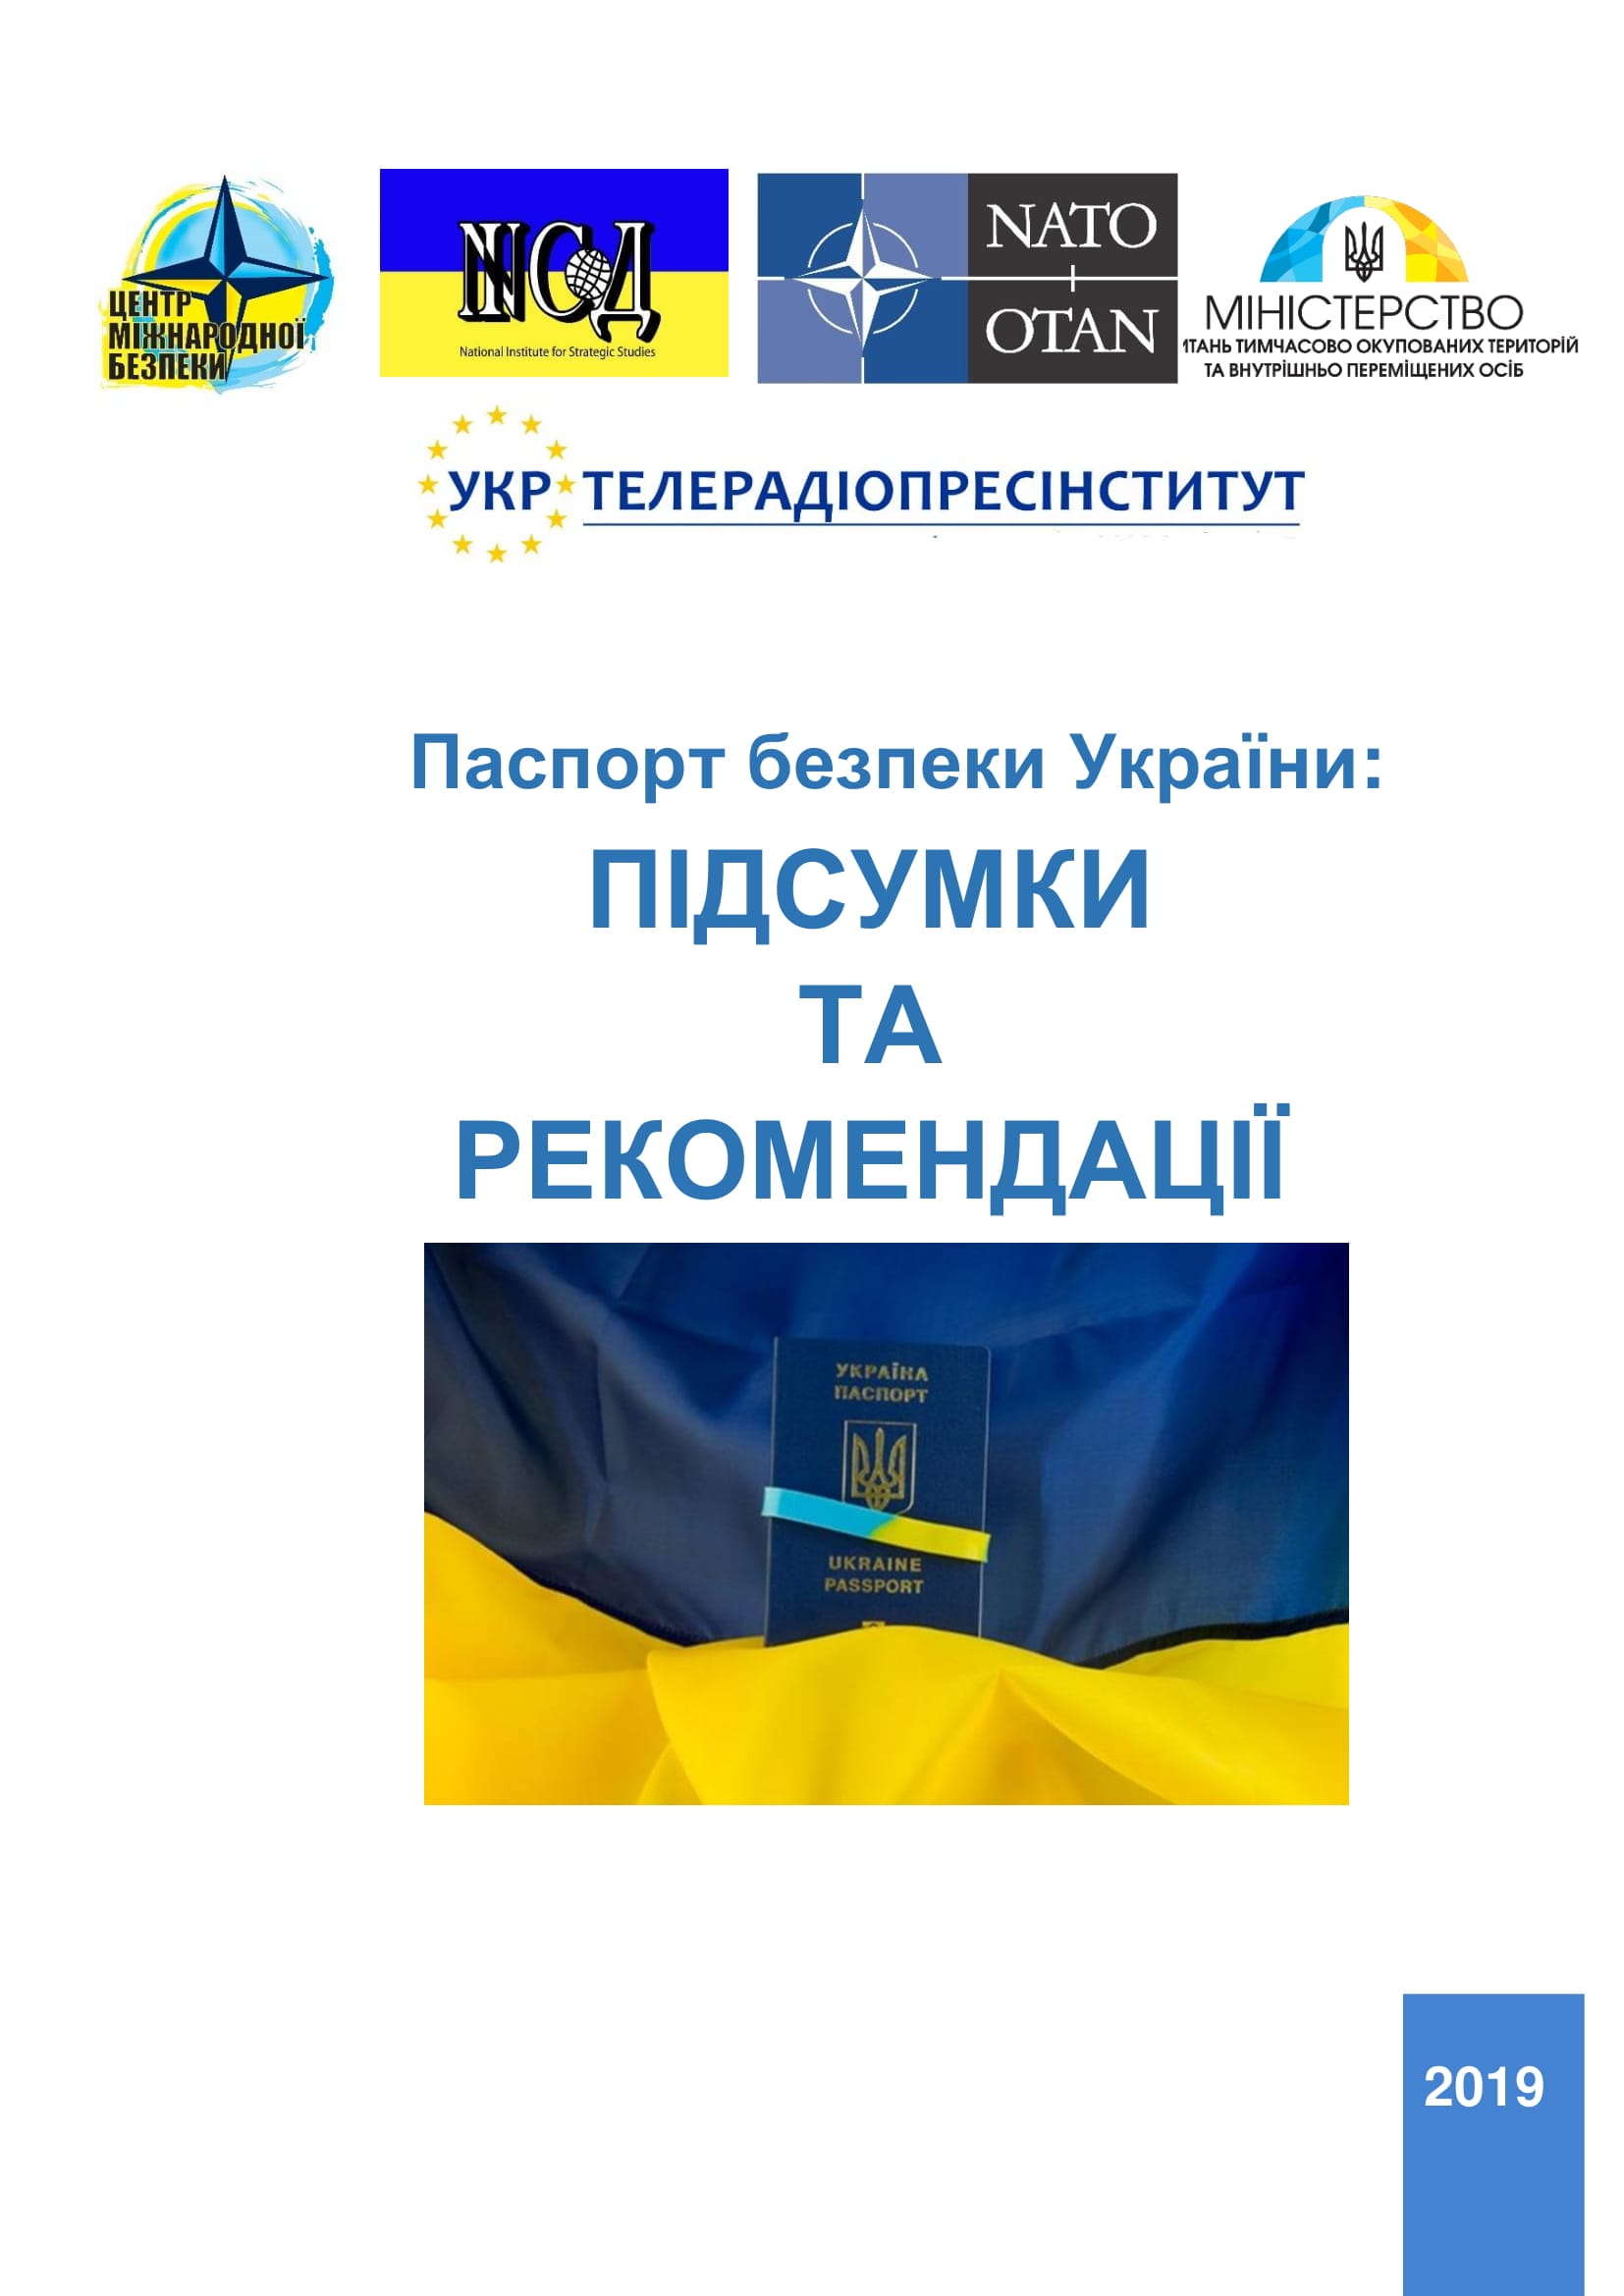 Паспорт безпеки Украiни 01